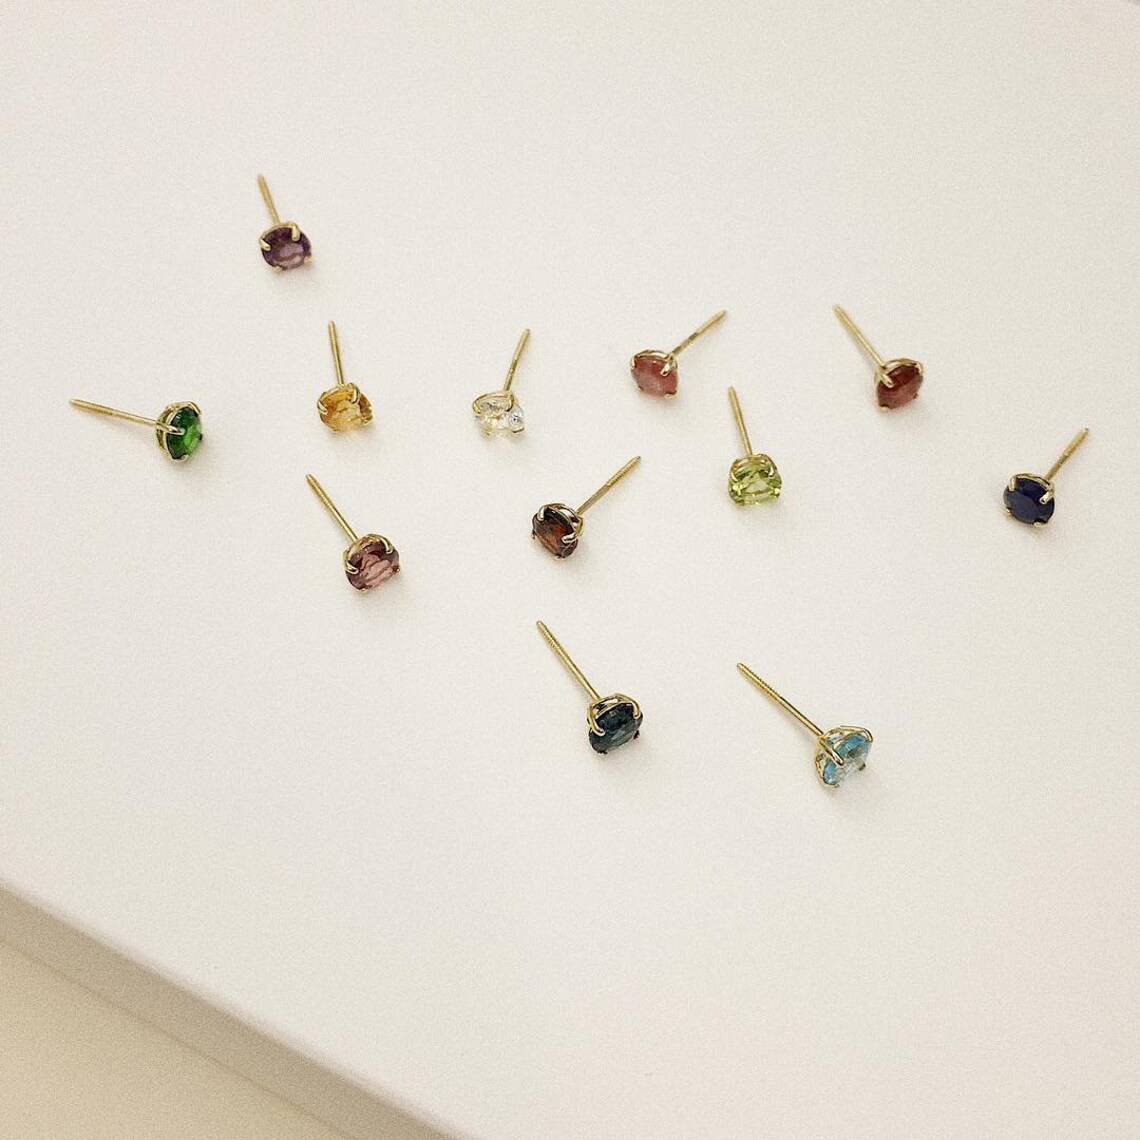 Anygolds 14K Real Solid Gold Stud Earrings Baby Genuine Birthstone Crystal Stud Earrings Cute Zodiac Gold Post Stud Ear Piercing Jewelry Screw Back Earrings - MJE30185-OCT Genuine Pink Ruby - image 3 of 4